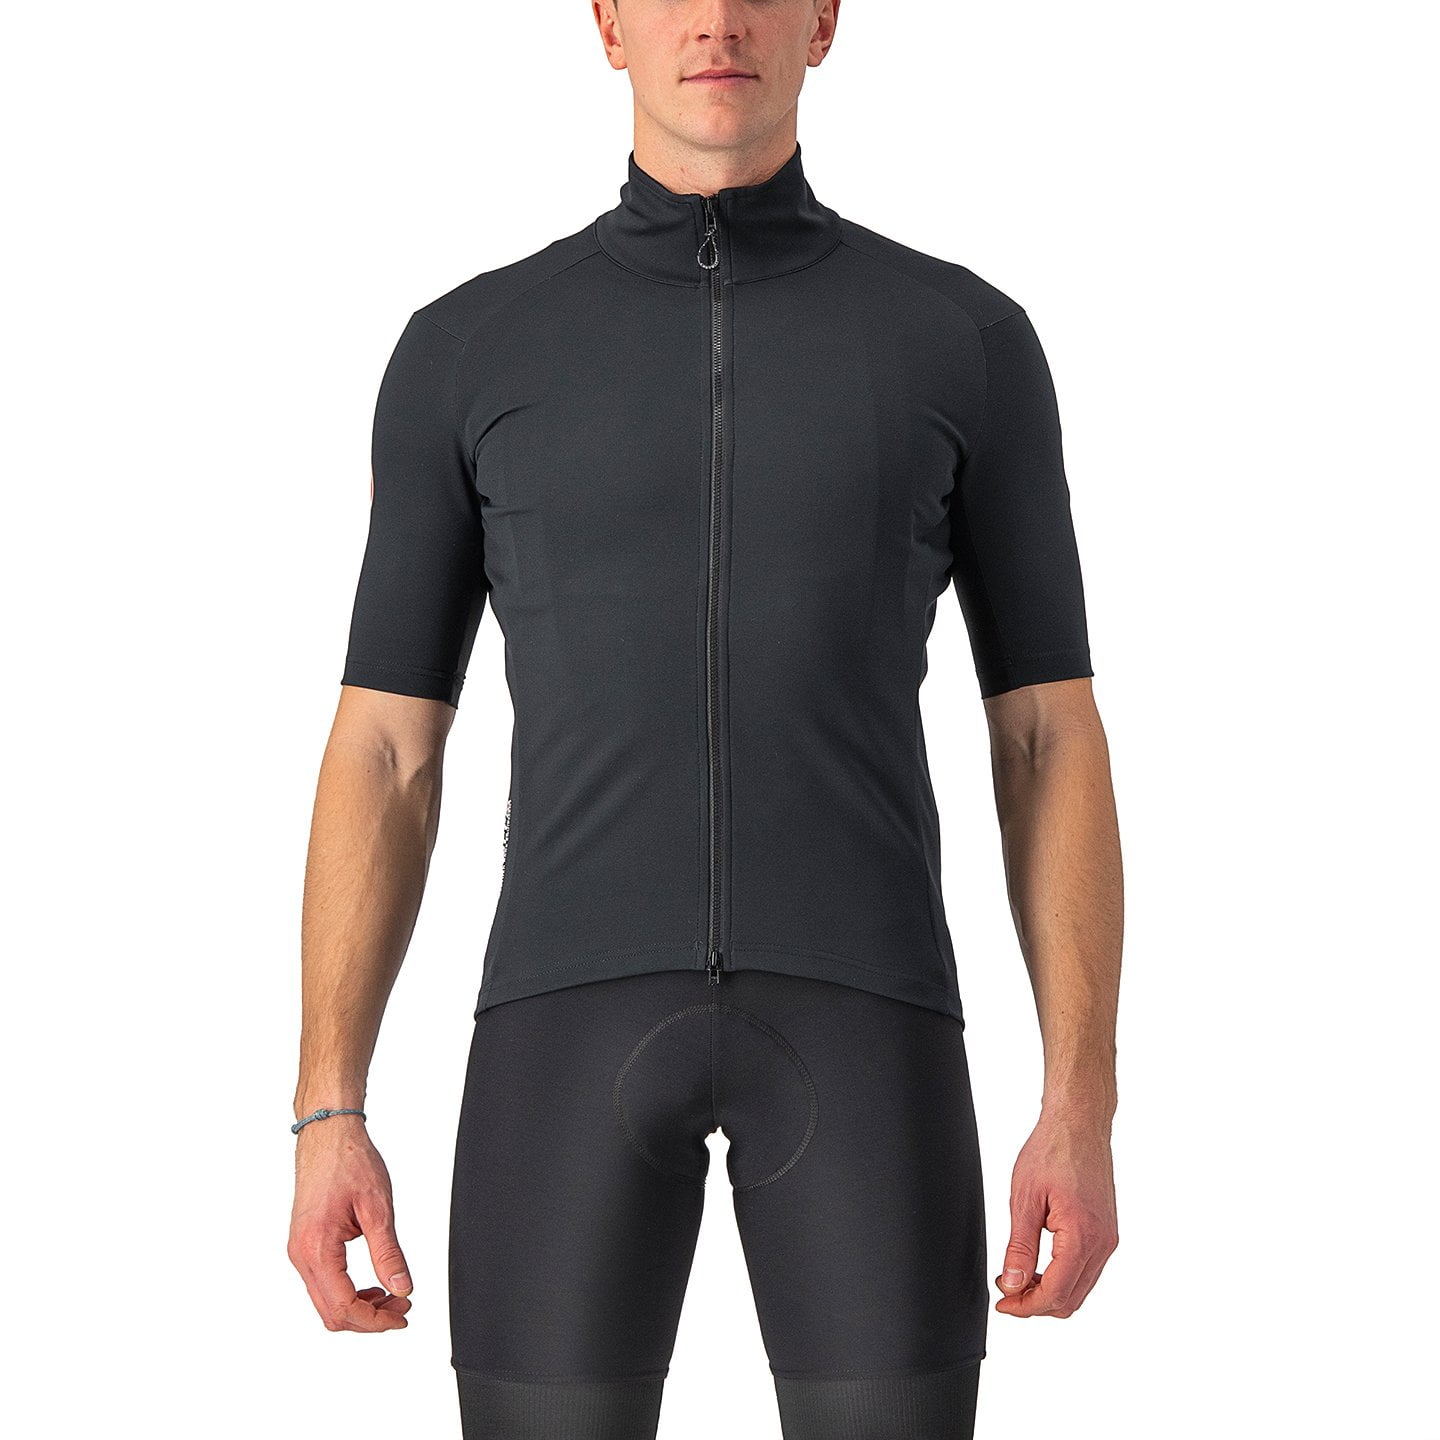 CASTELLI Perfetto RoS 2 Wind Short Sleeve Light Jacket Light Jacket, for men, size 2XL, Cycle jacket, Cycling clothing